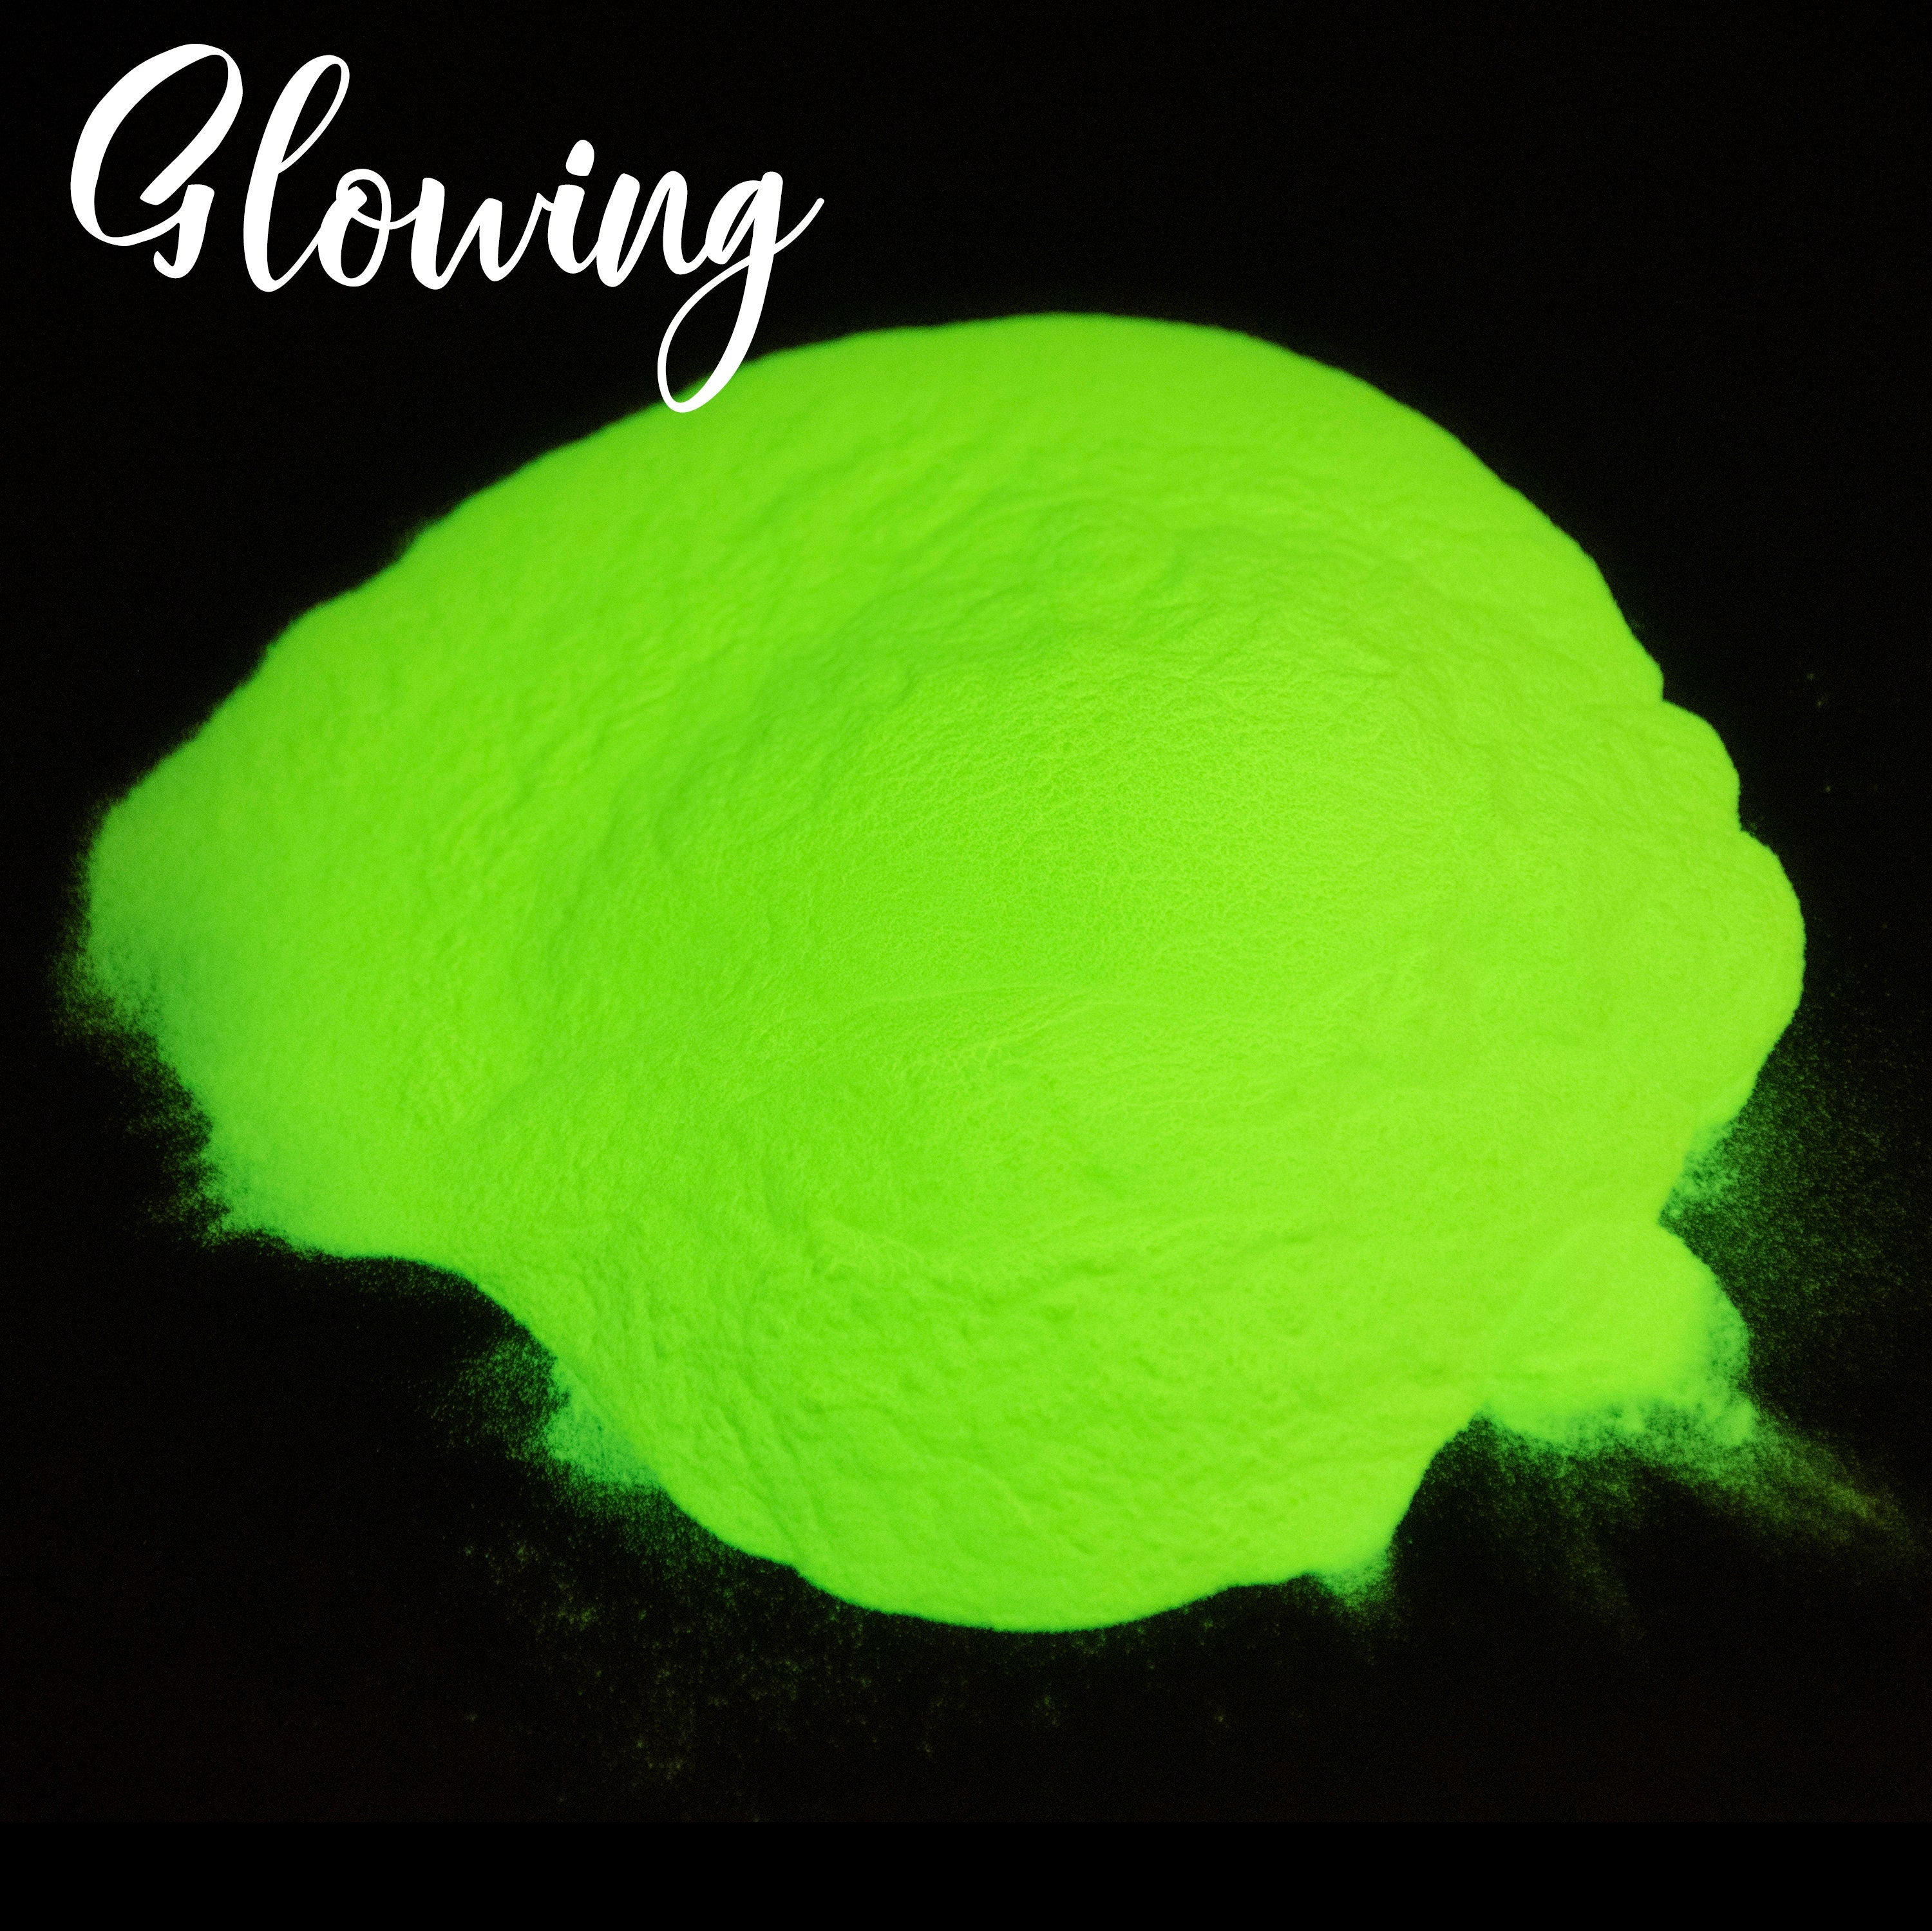 Green Glow in the Dark - Yellow in Daylight - Pigment Powder